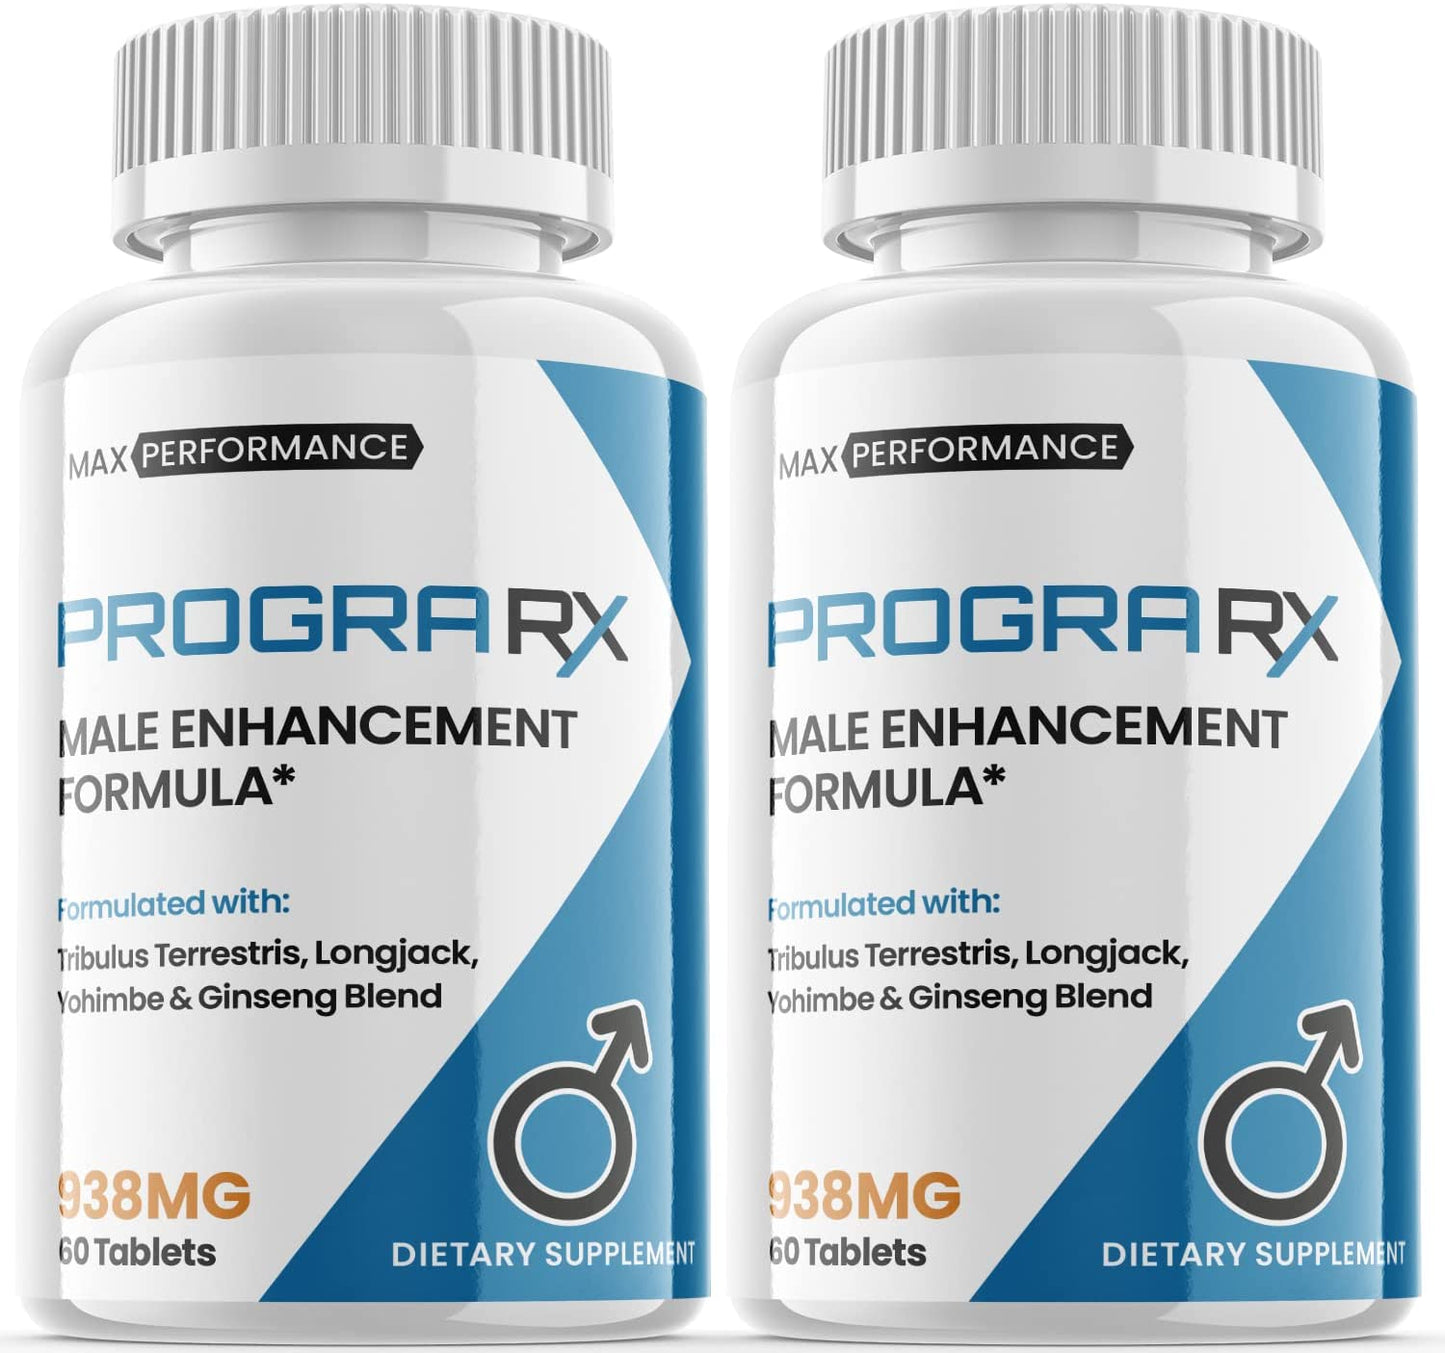 Progra RX Male Enhancement Pills